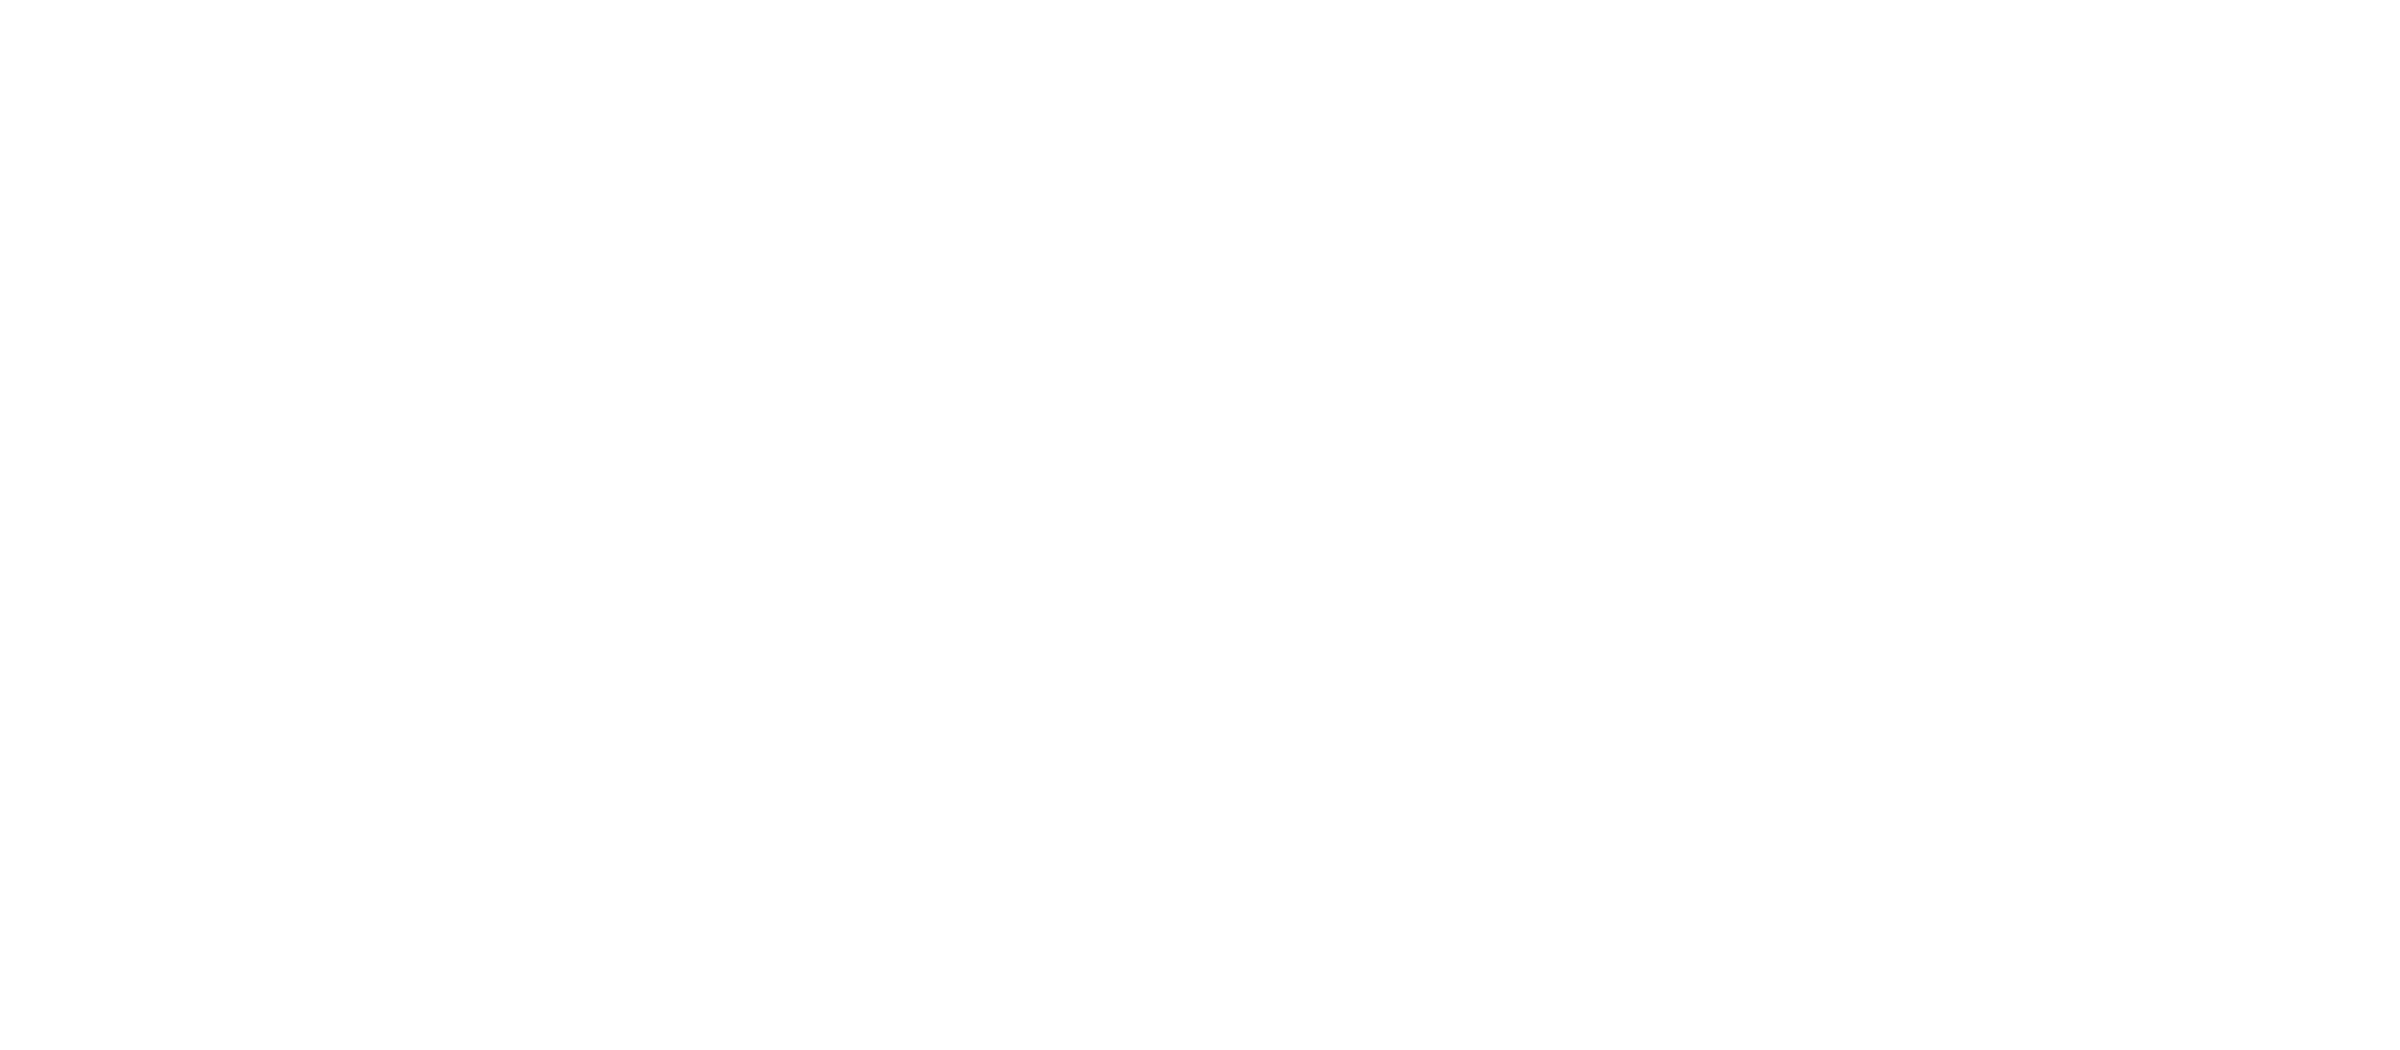 EDWIN Logo